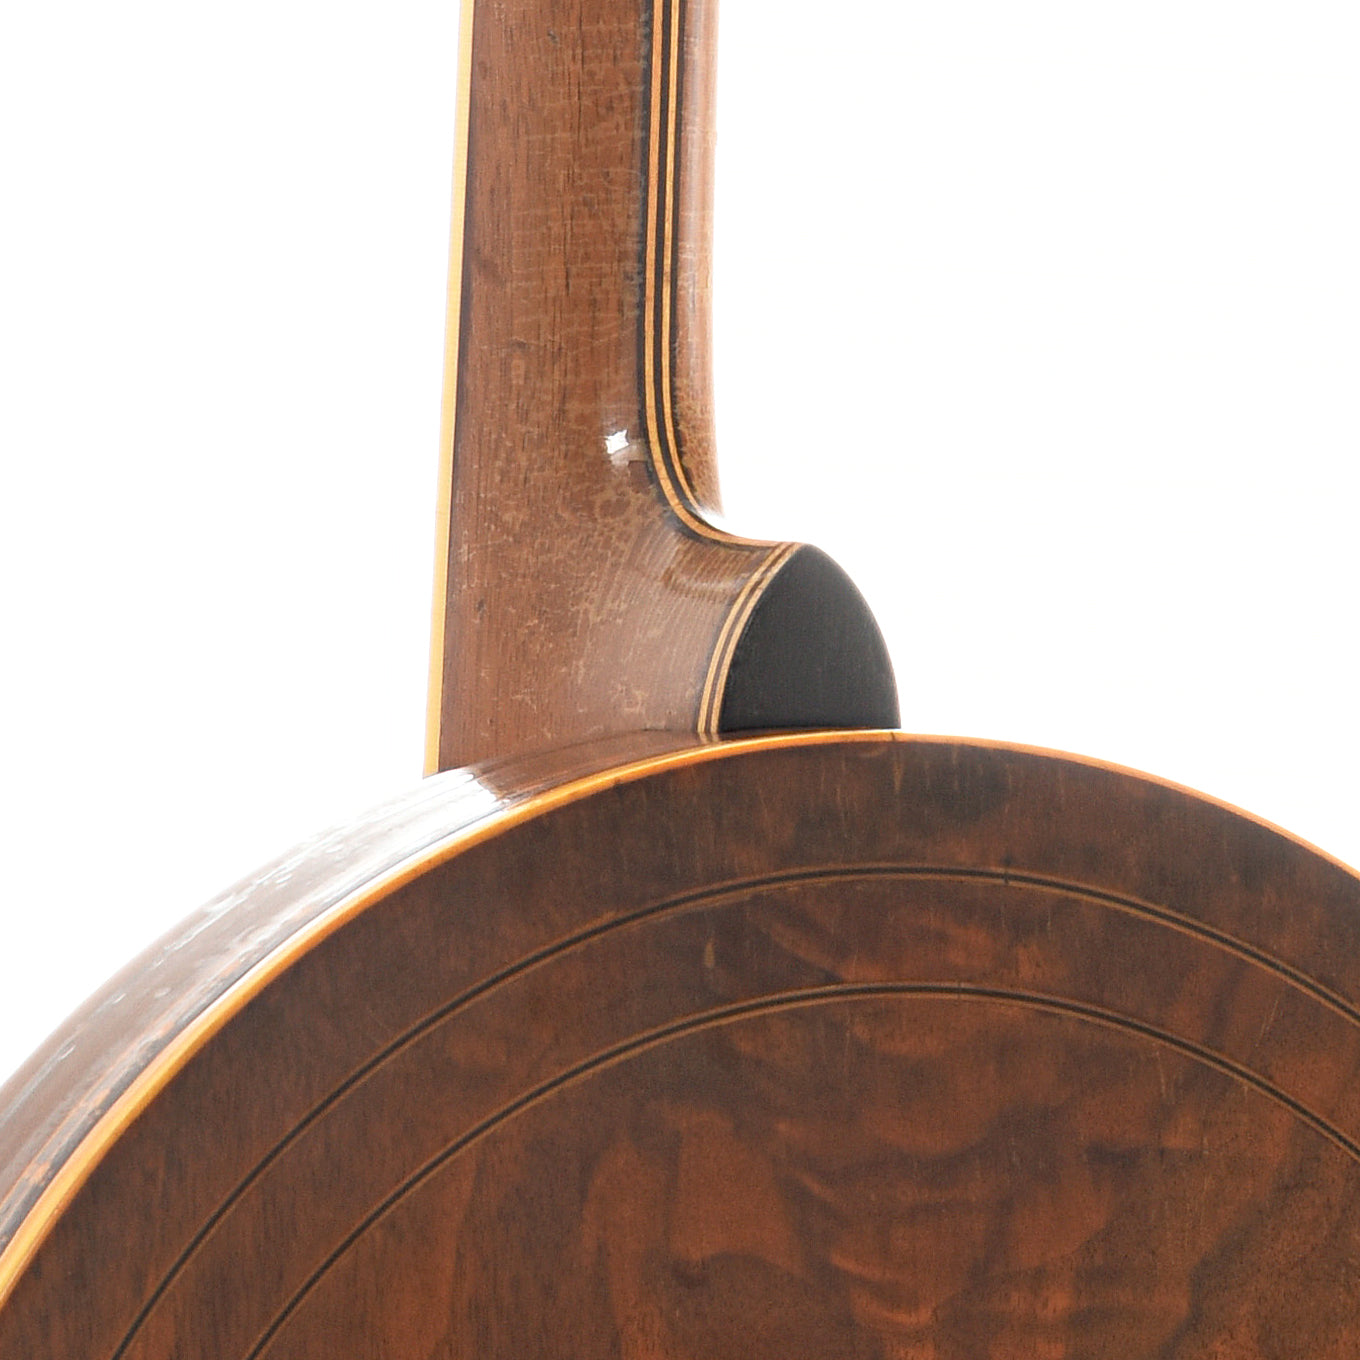 Heel of Ludwig Riviera Plectrum Banjo